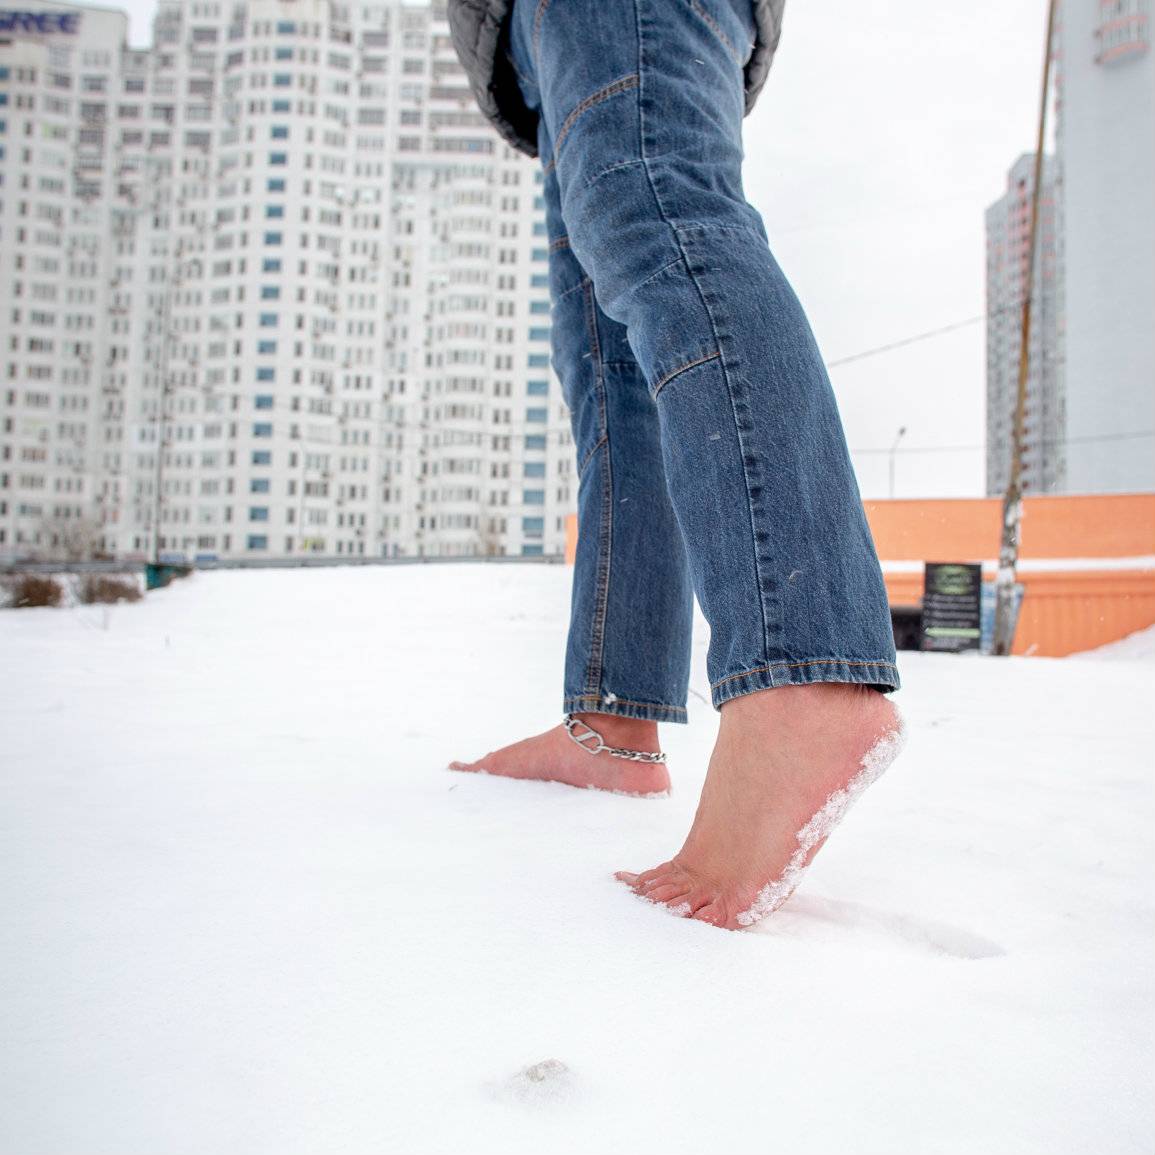 Босые ноги на снегу